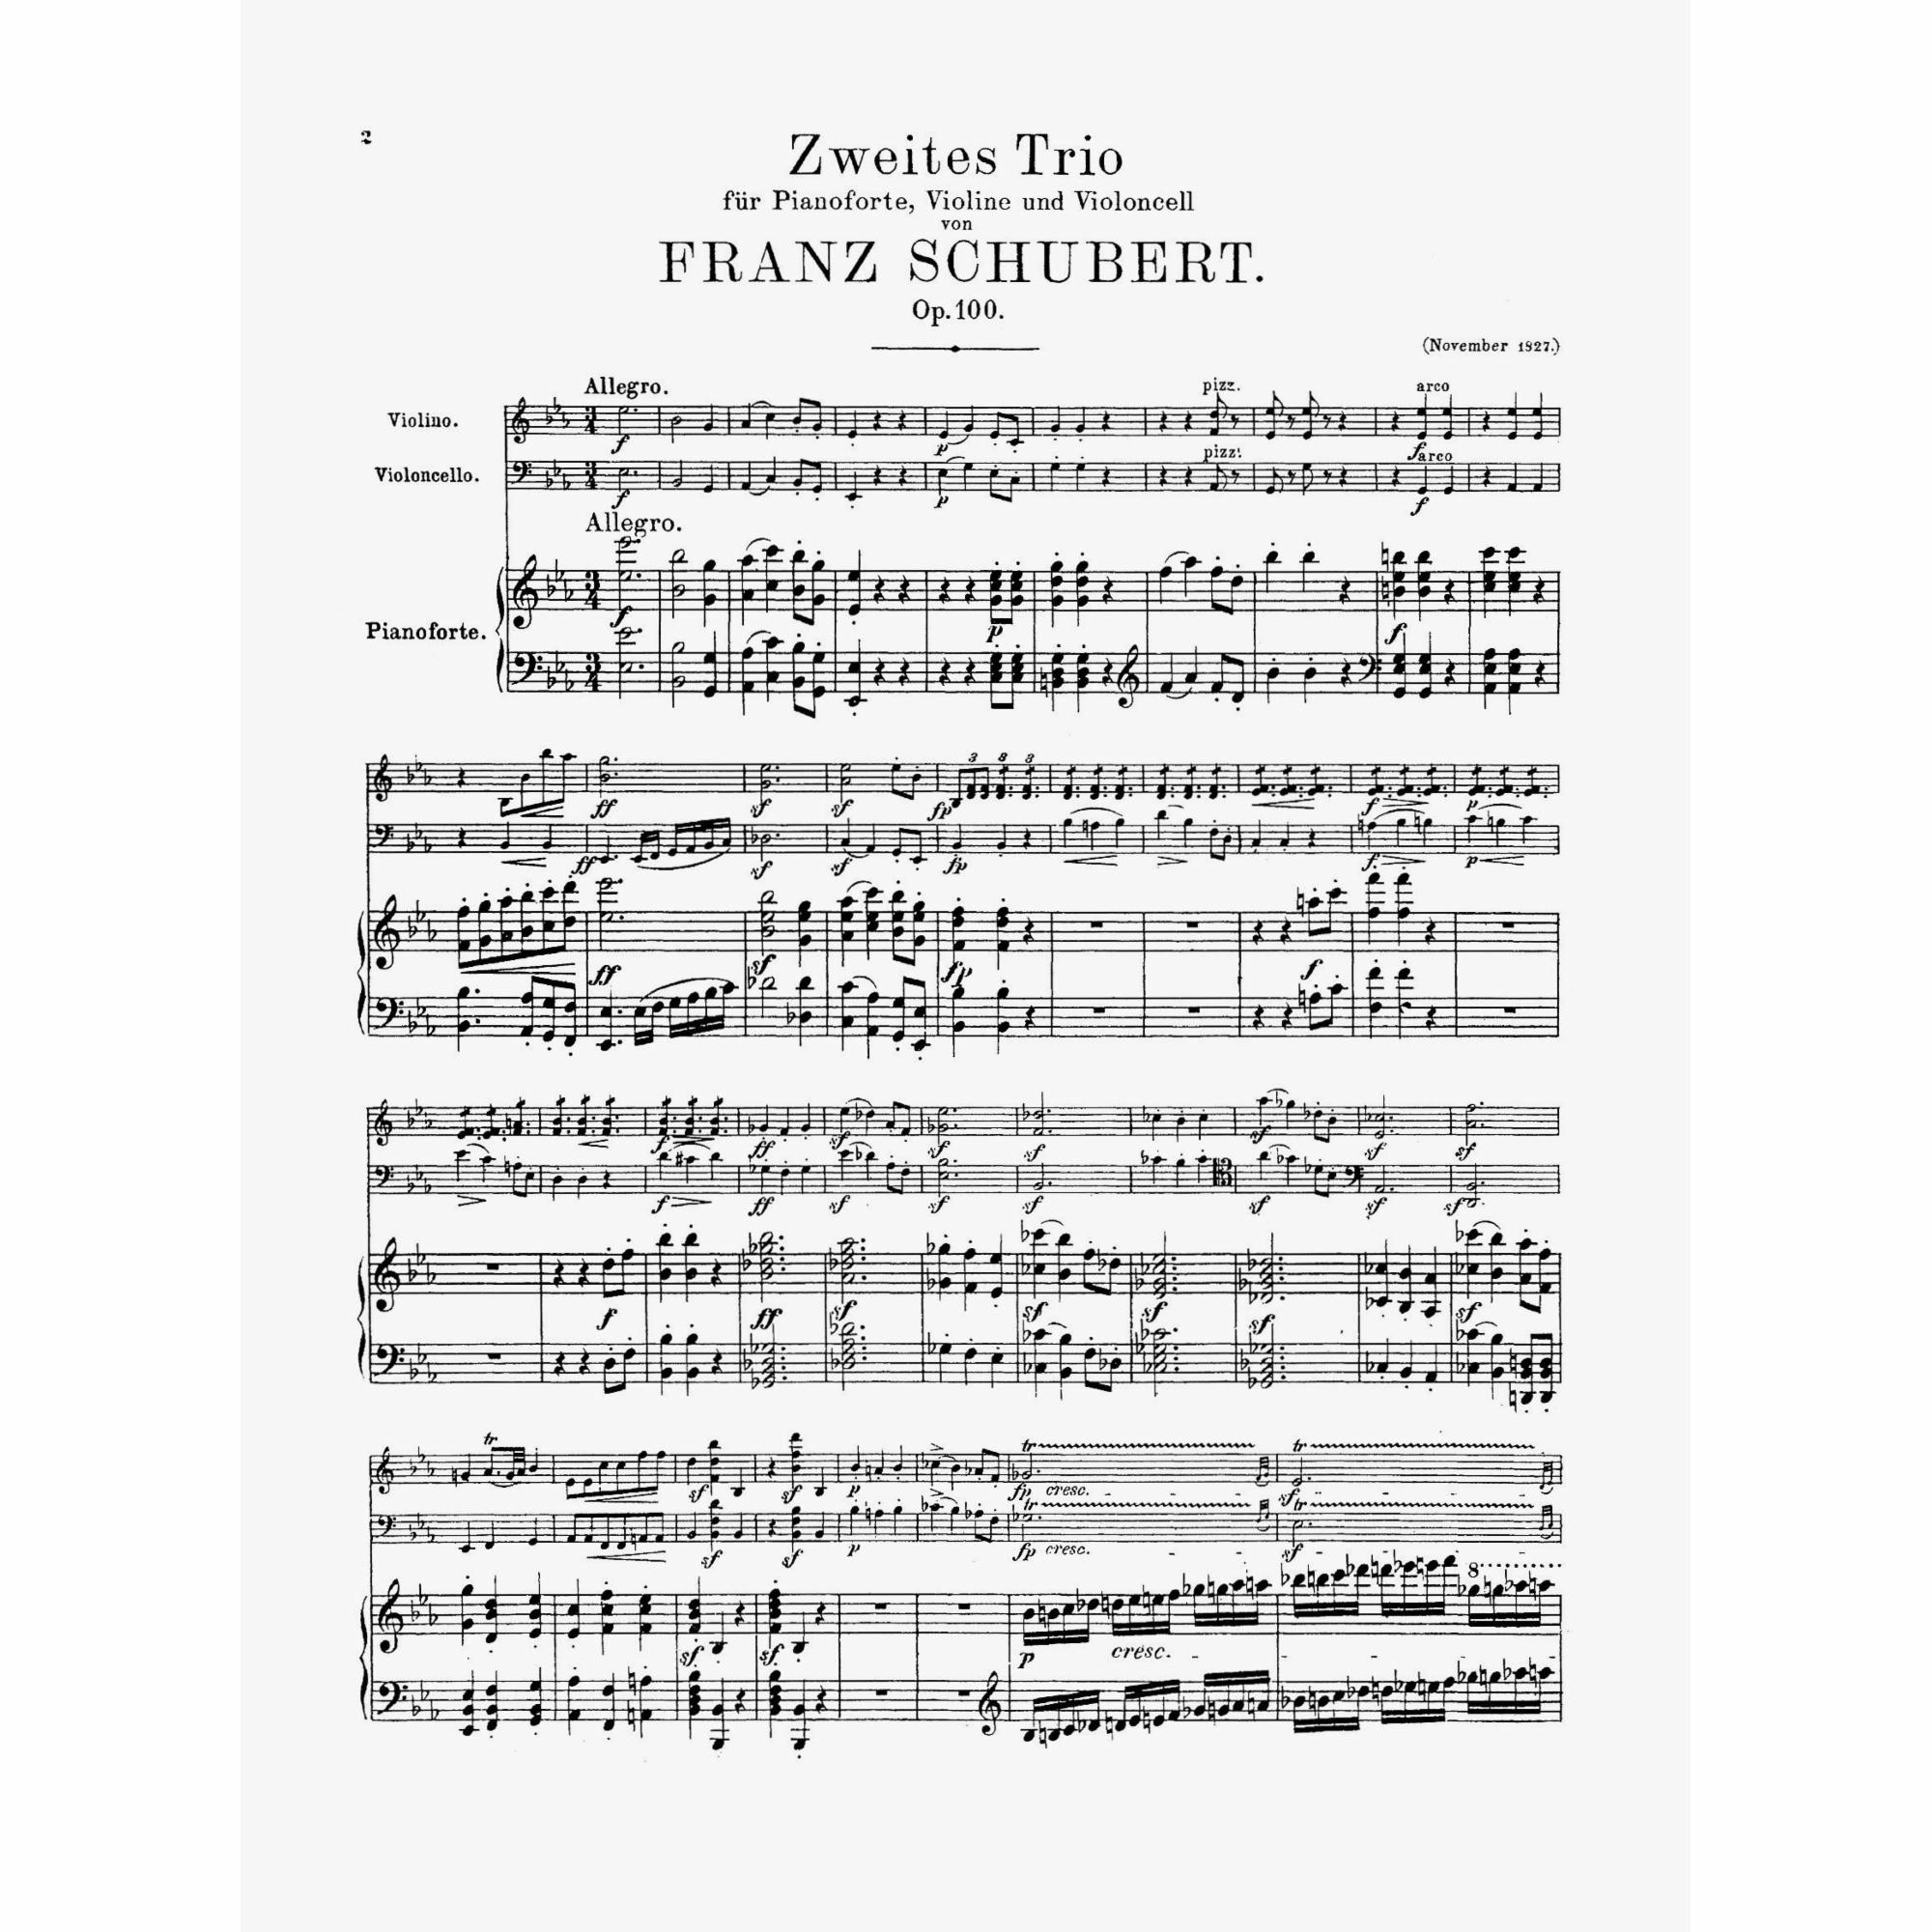 Schubert -- Piano Trio No. 2 in E-flat Major, Op. 100 | Southwest Strings